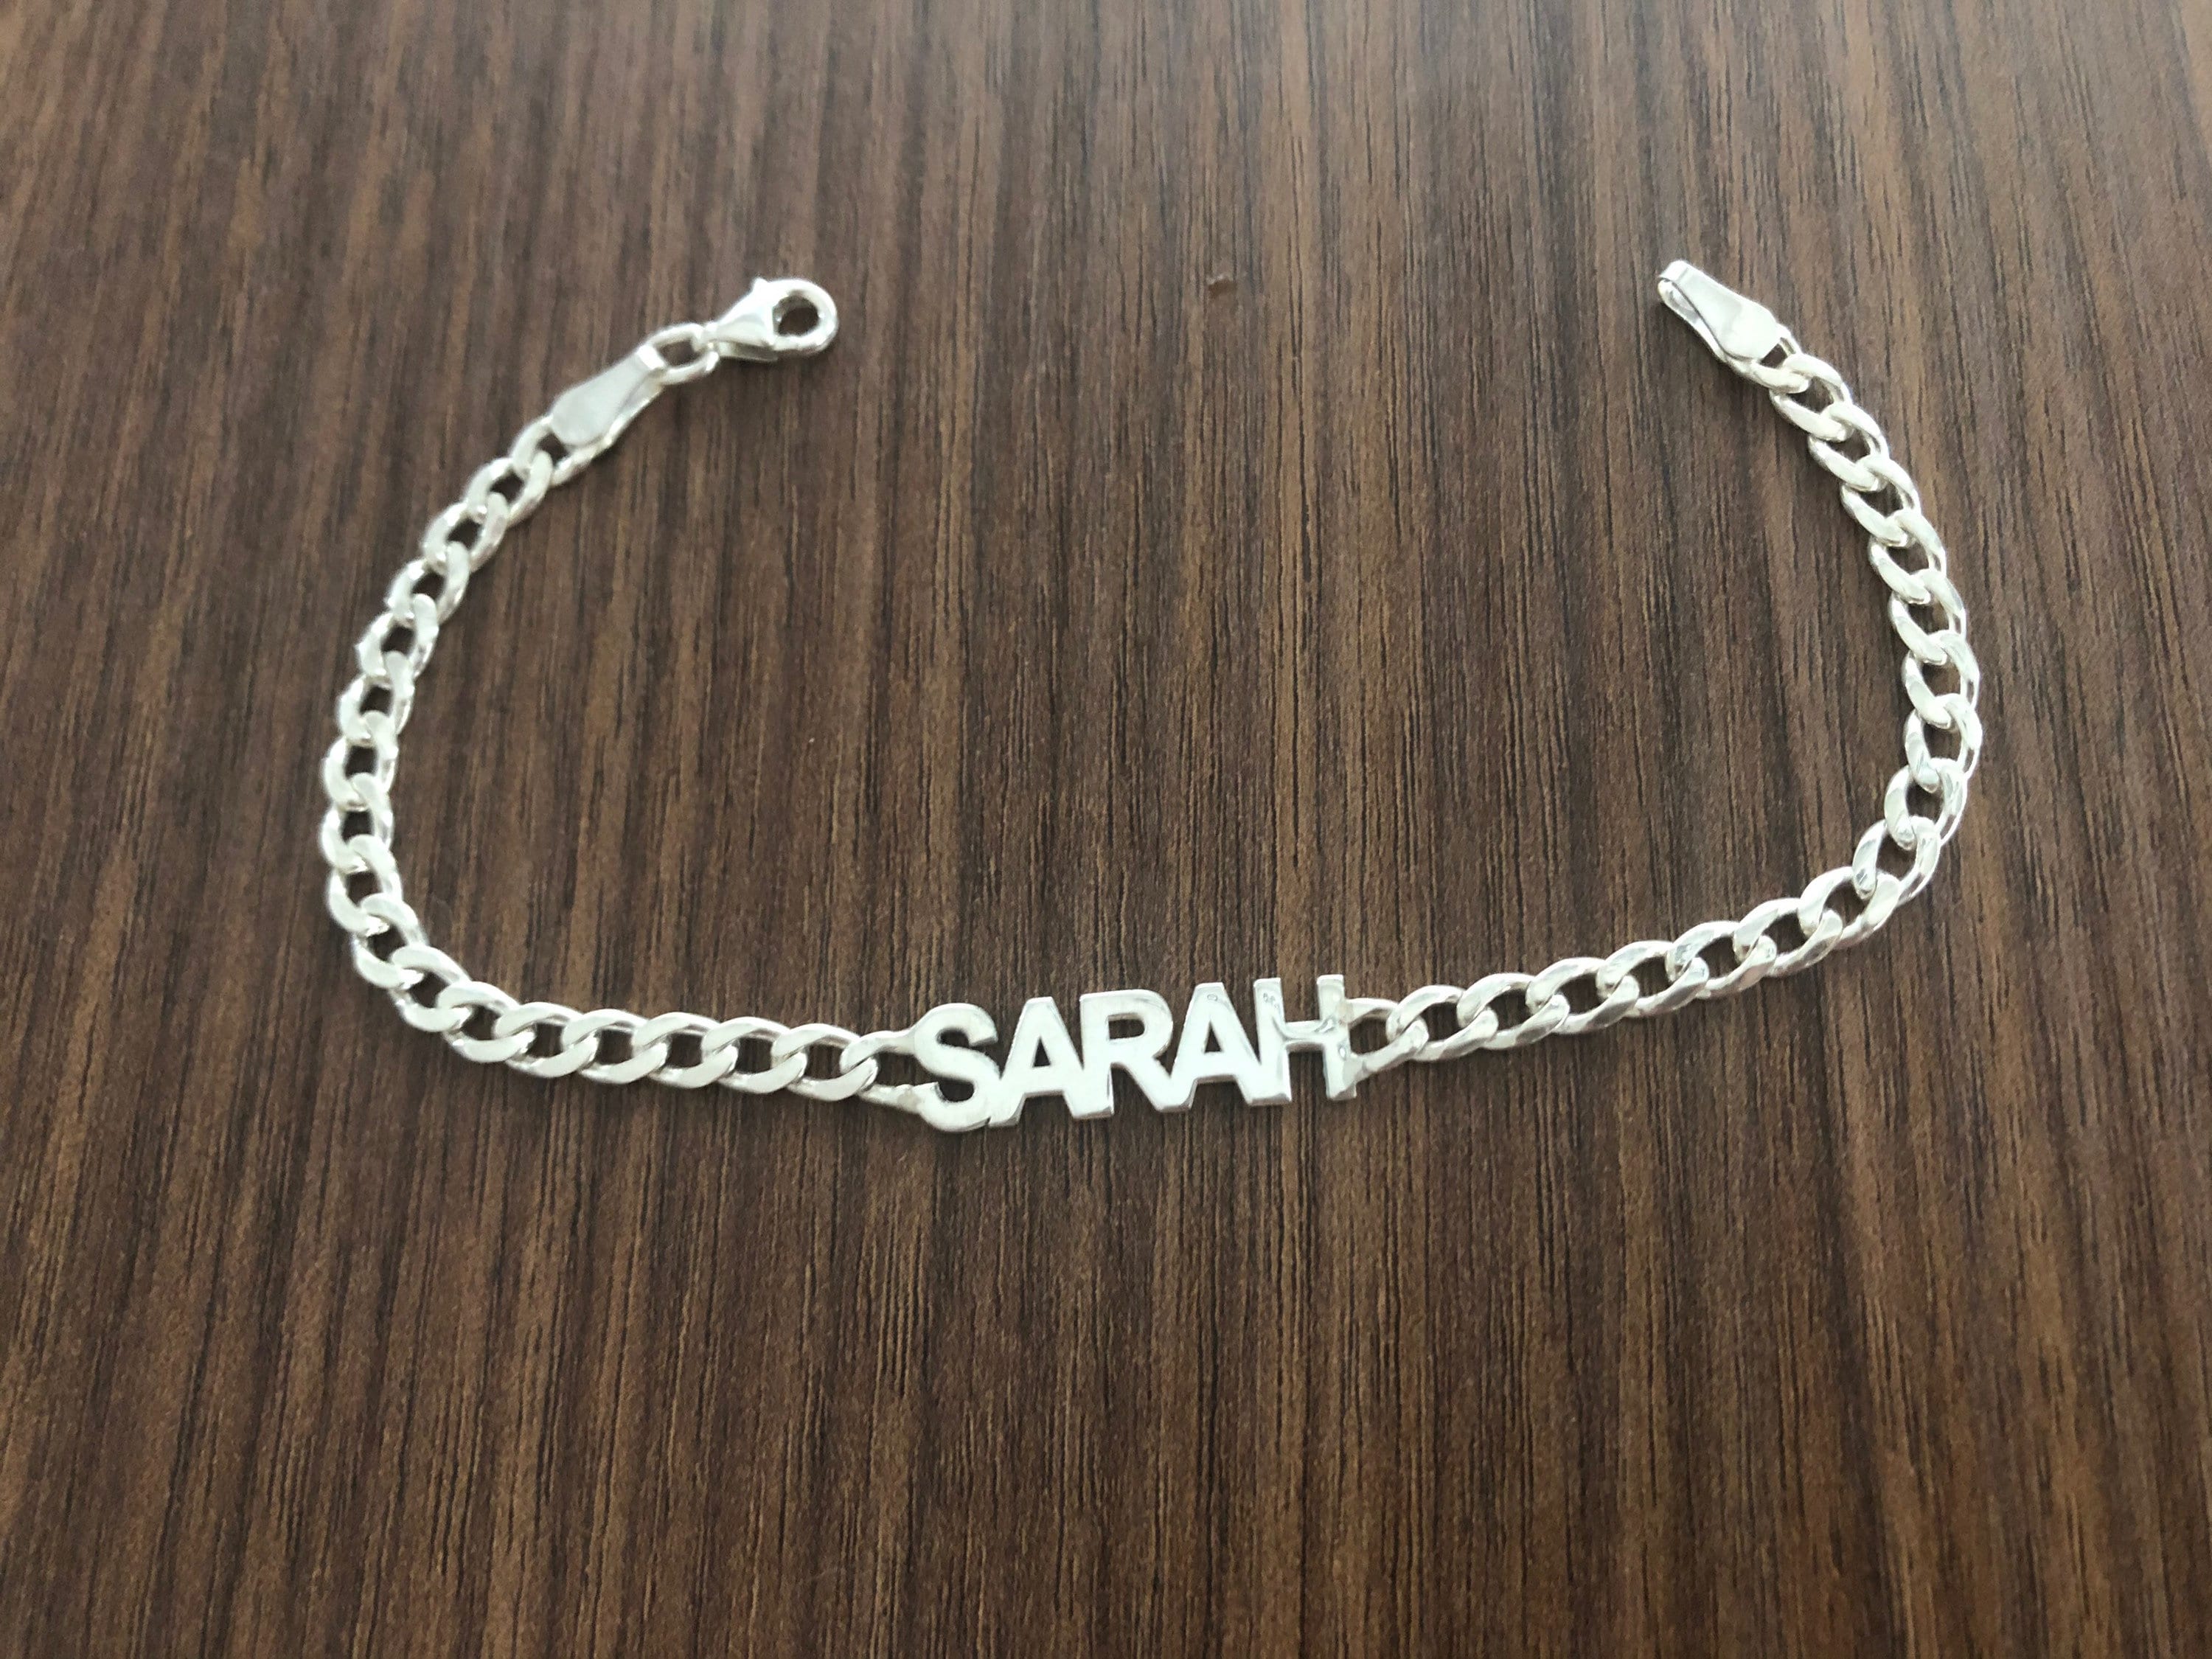 Personalized Silver Bracelet Personalized Chain Bracelet 